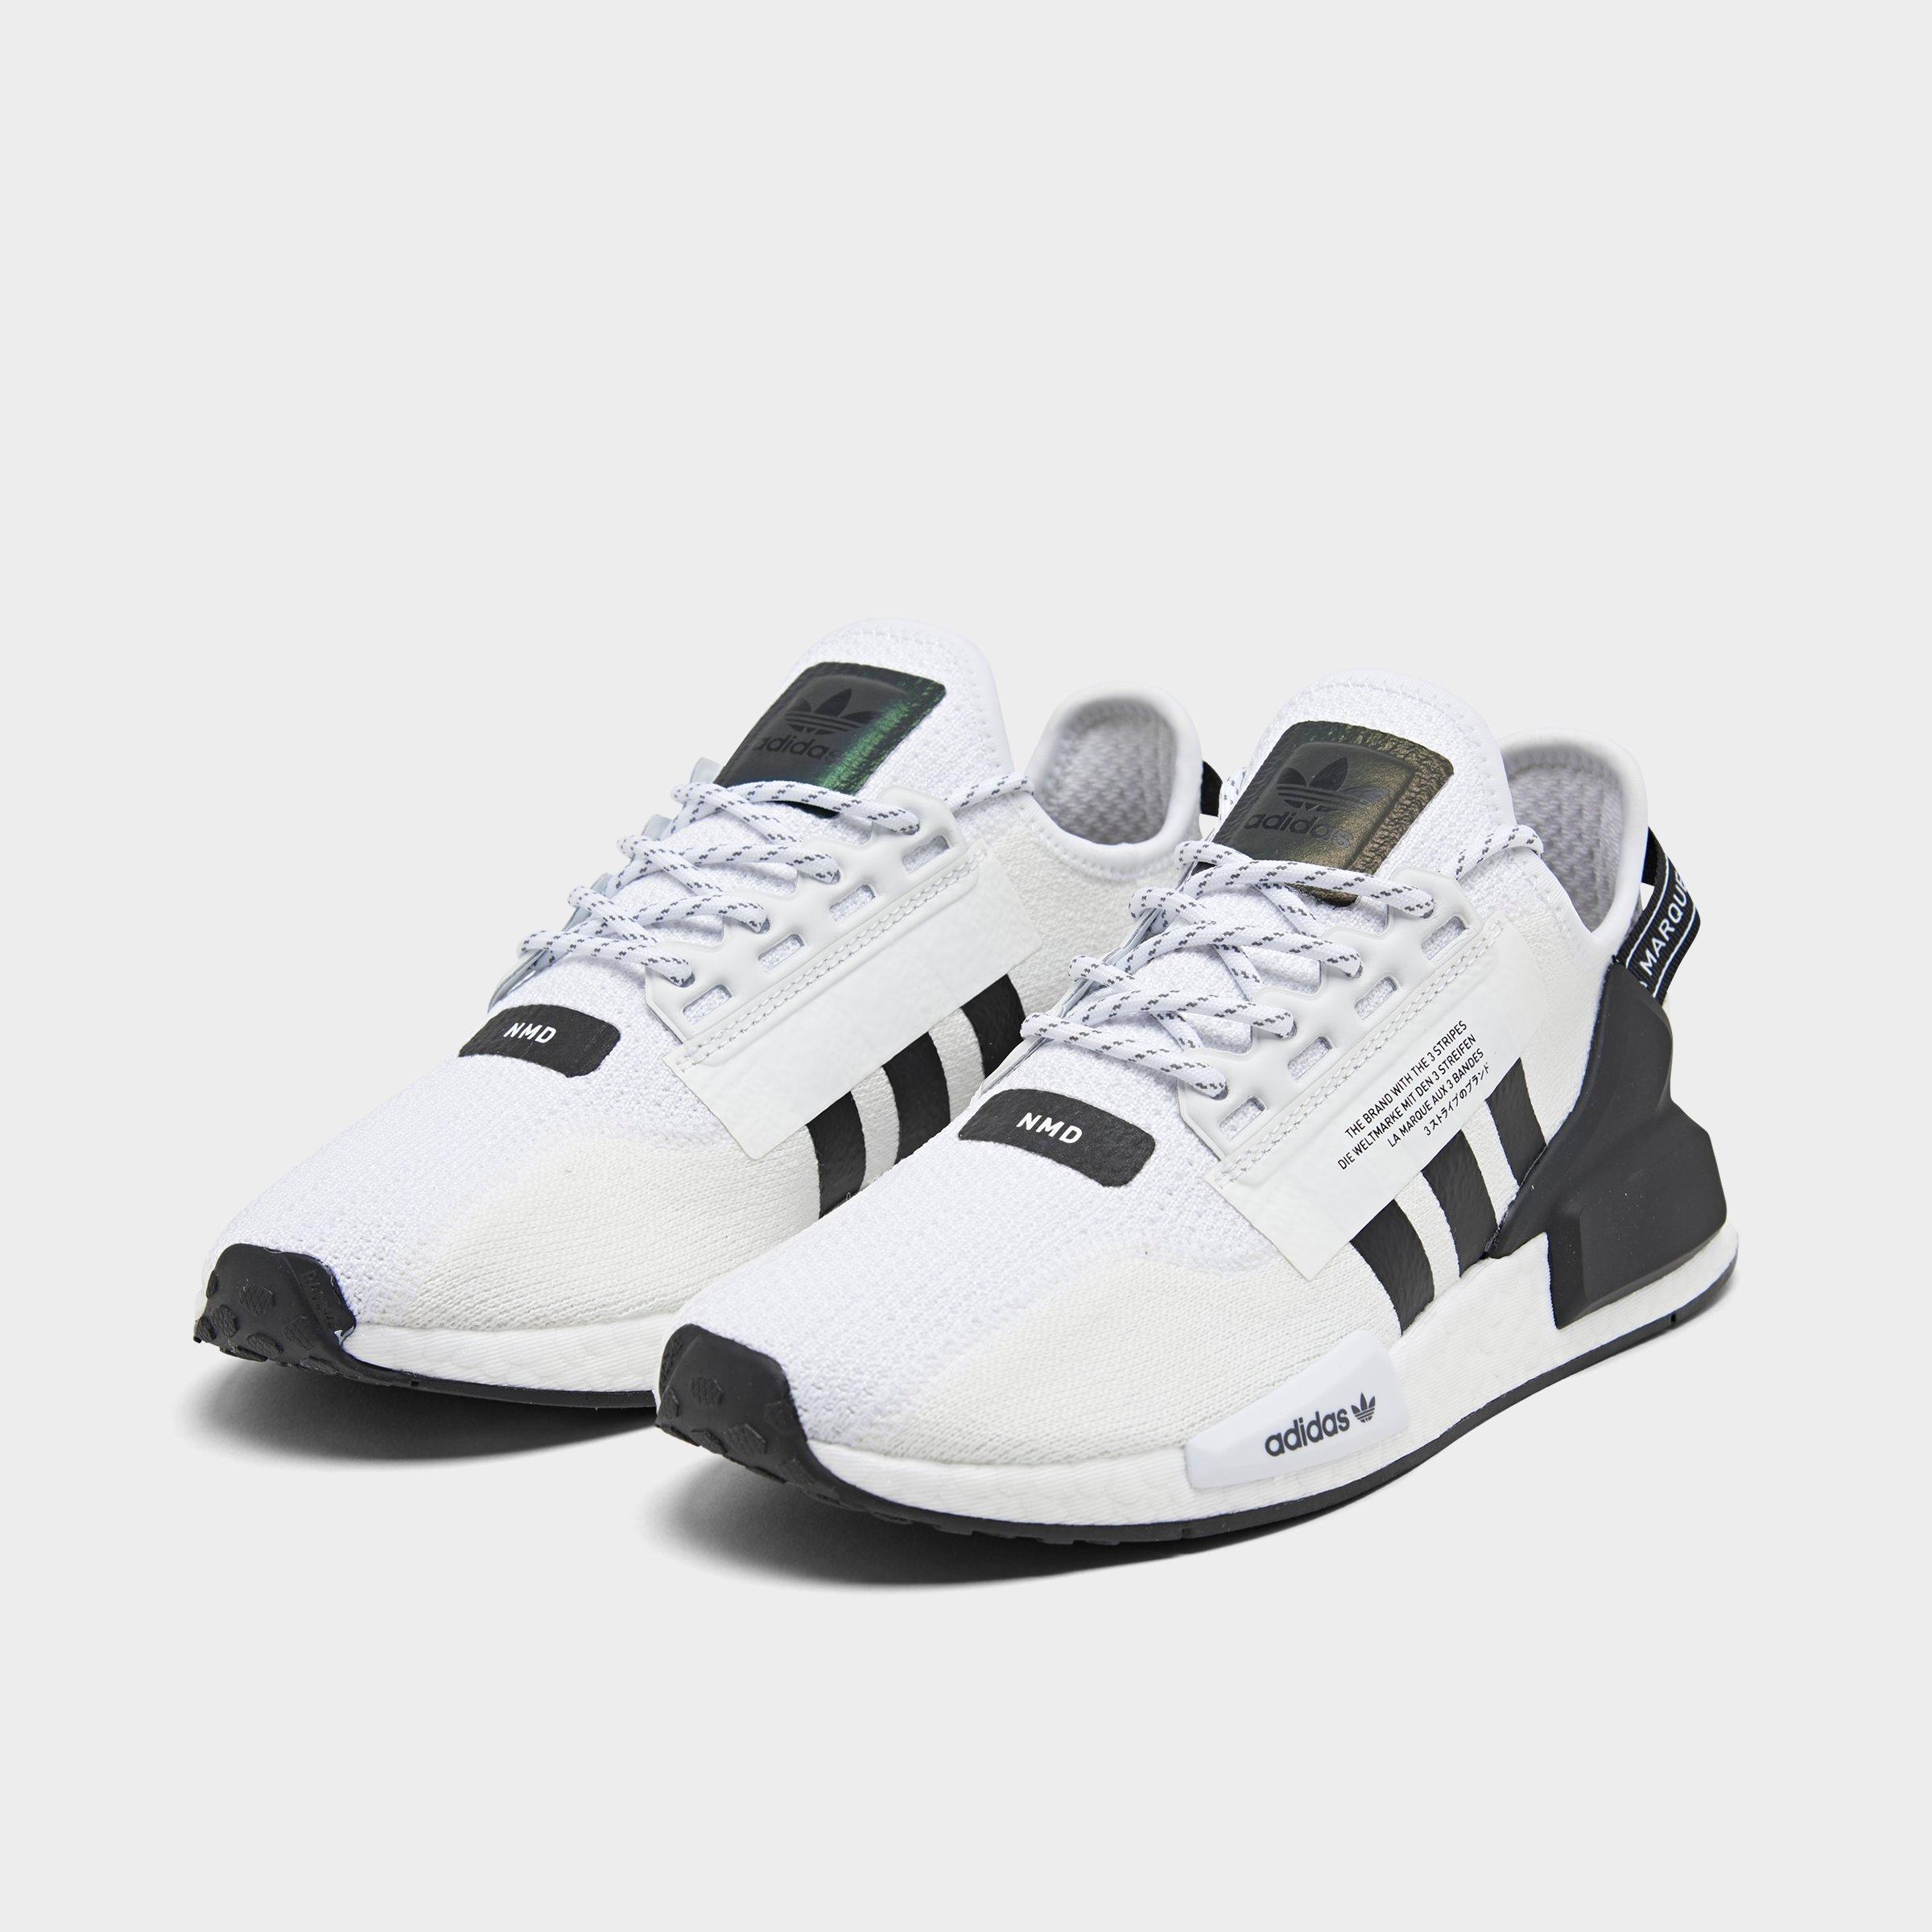 Adidas Black Nmd R1 Stlt Primeknit Sneakers CQ2386 Farfetch